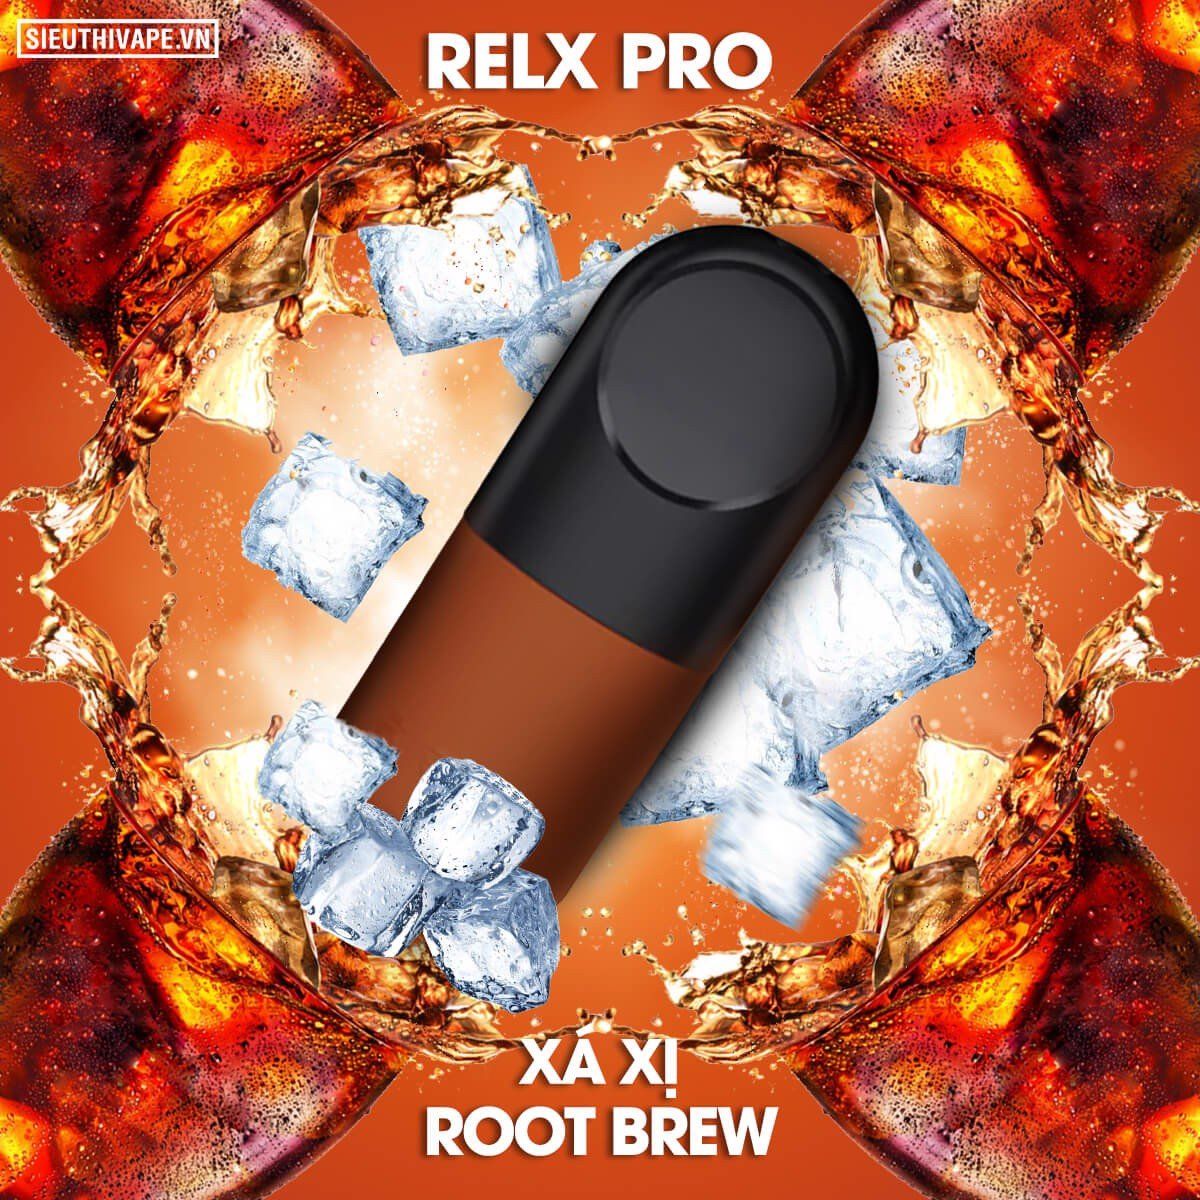  Pod Relx Pro 2 Root Brew Cho Relx Pod - Chính Hãng 